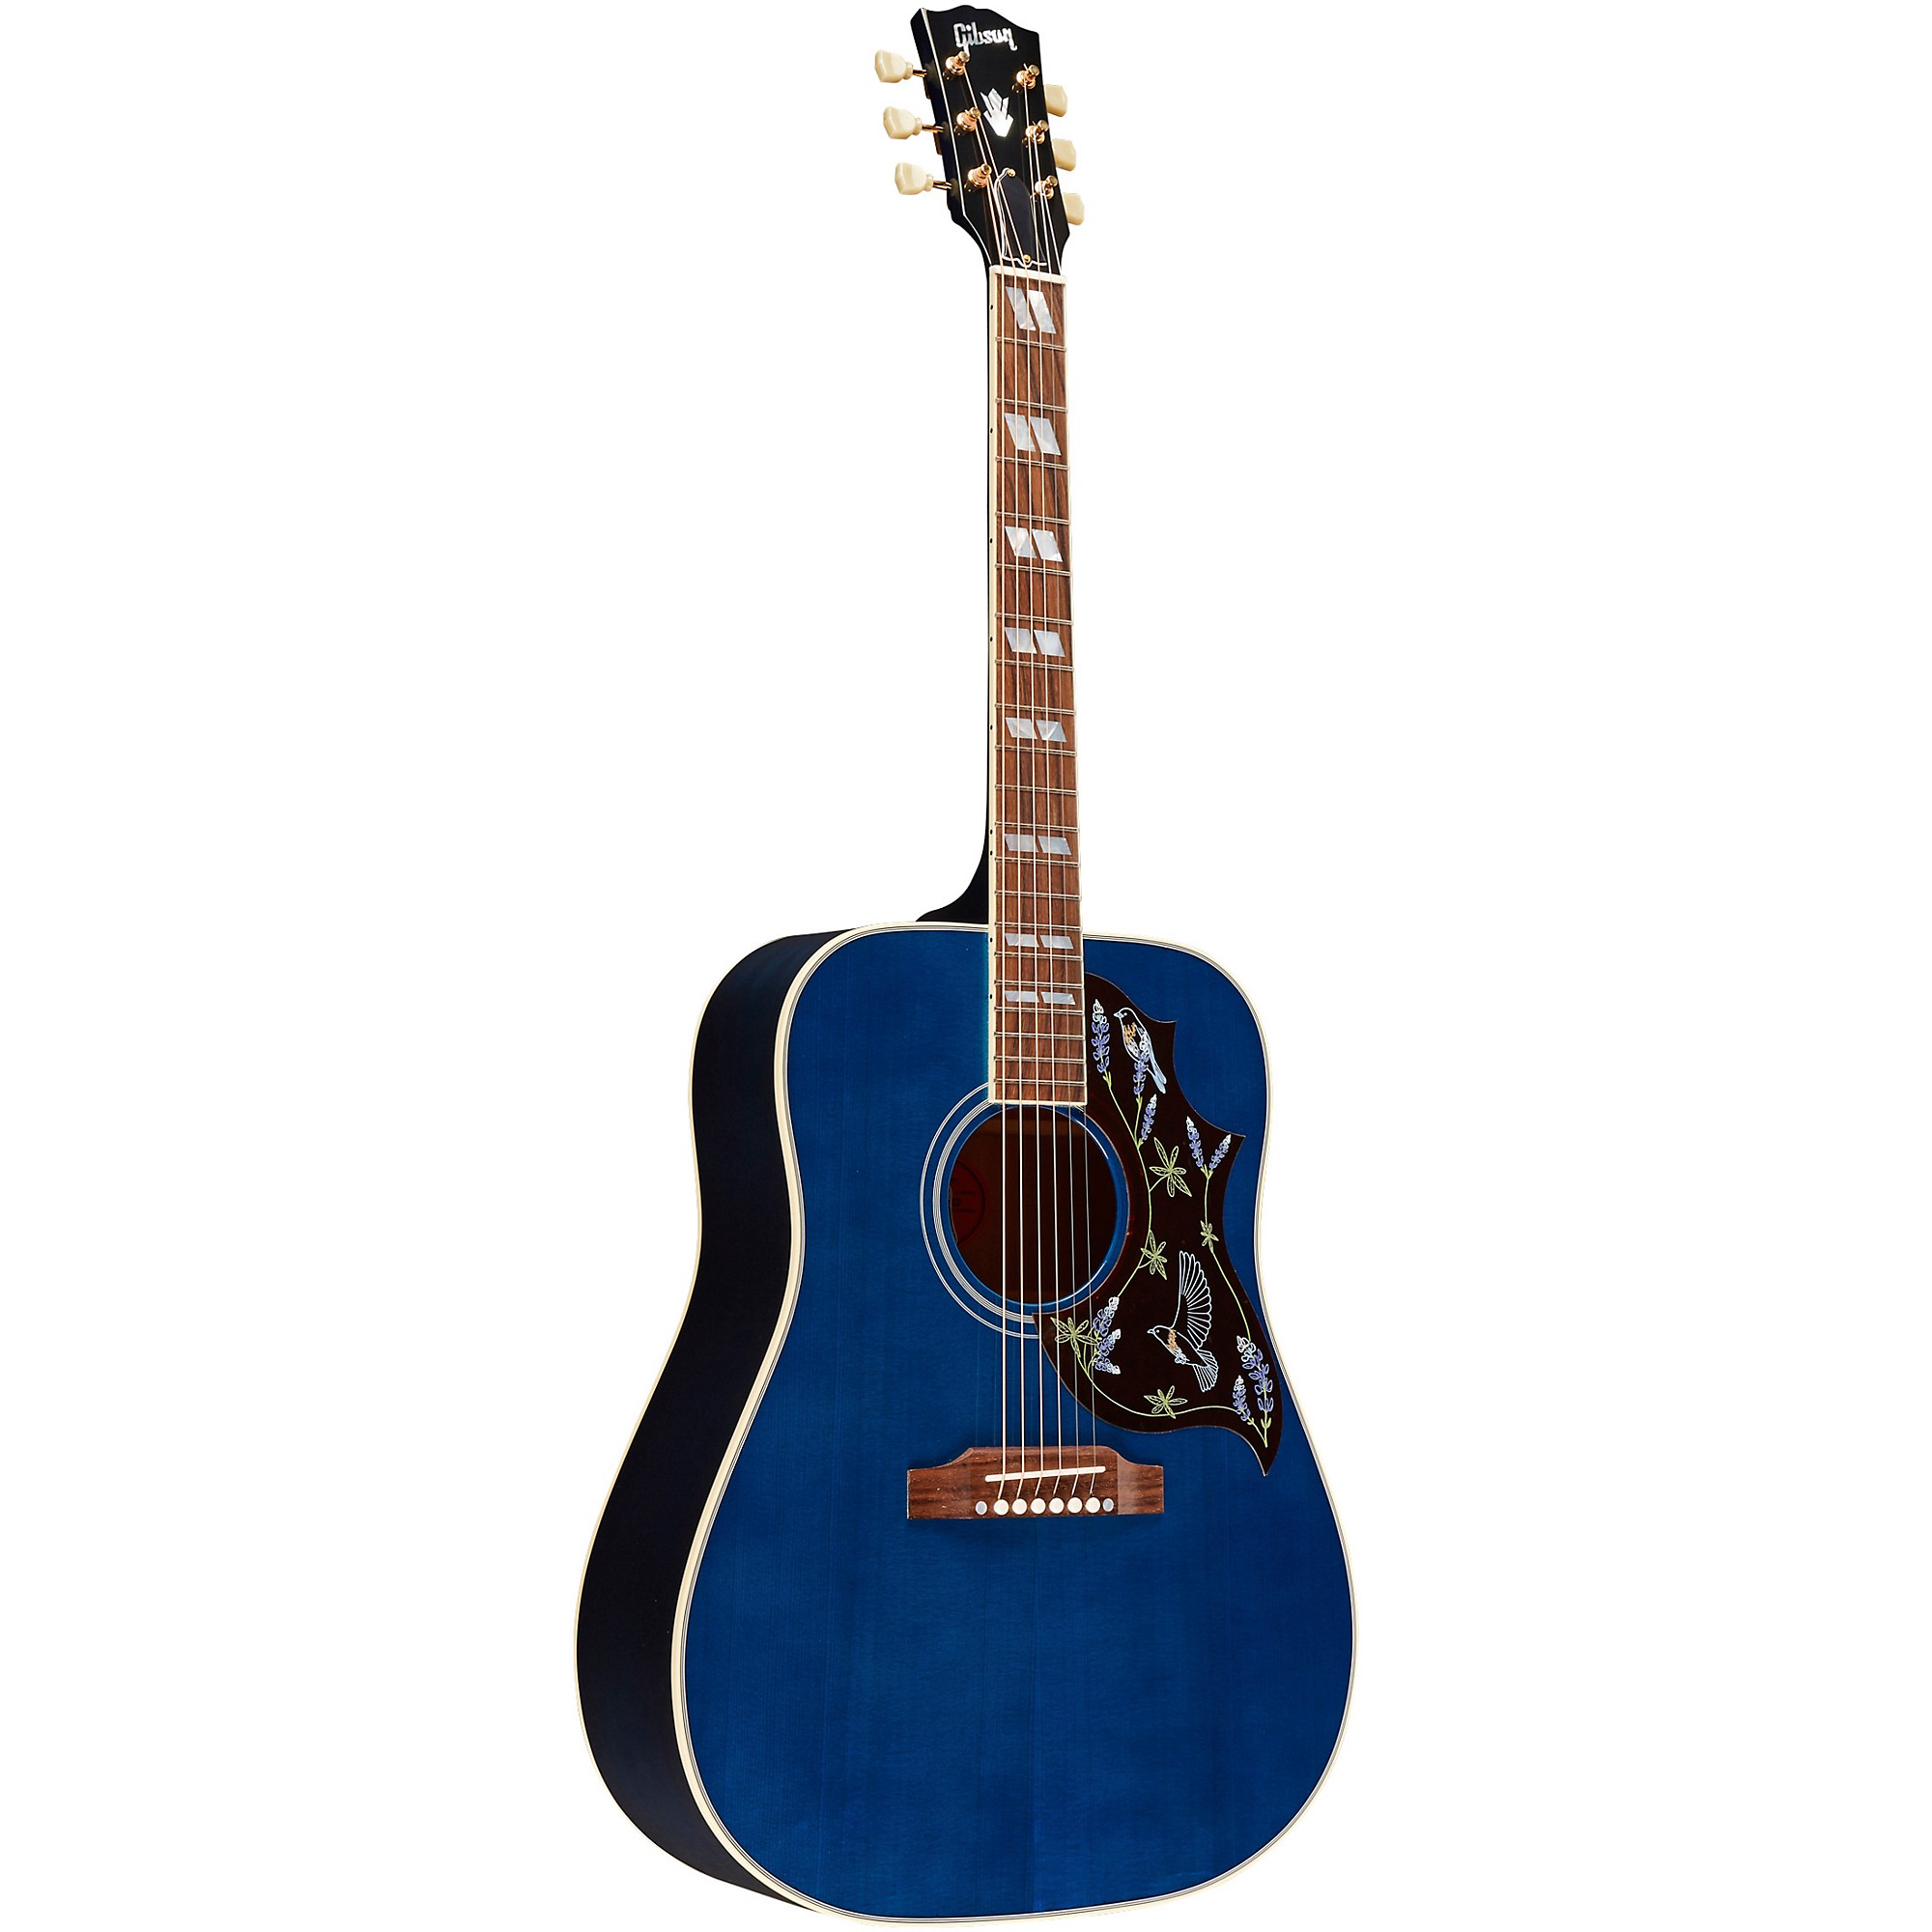 Акустически-электрическая гитара Gibson Miranda Lambert Bluebird Signature Bluebonnet акустическая гитара gibson miranda lambert bluebird bluebonnet